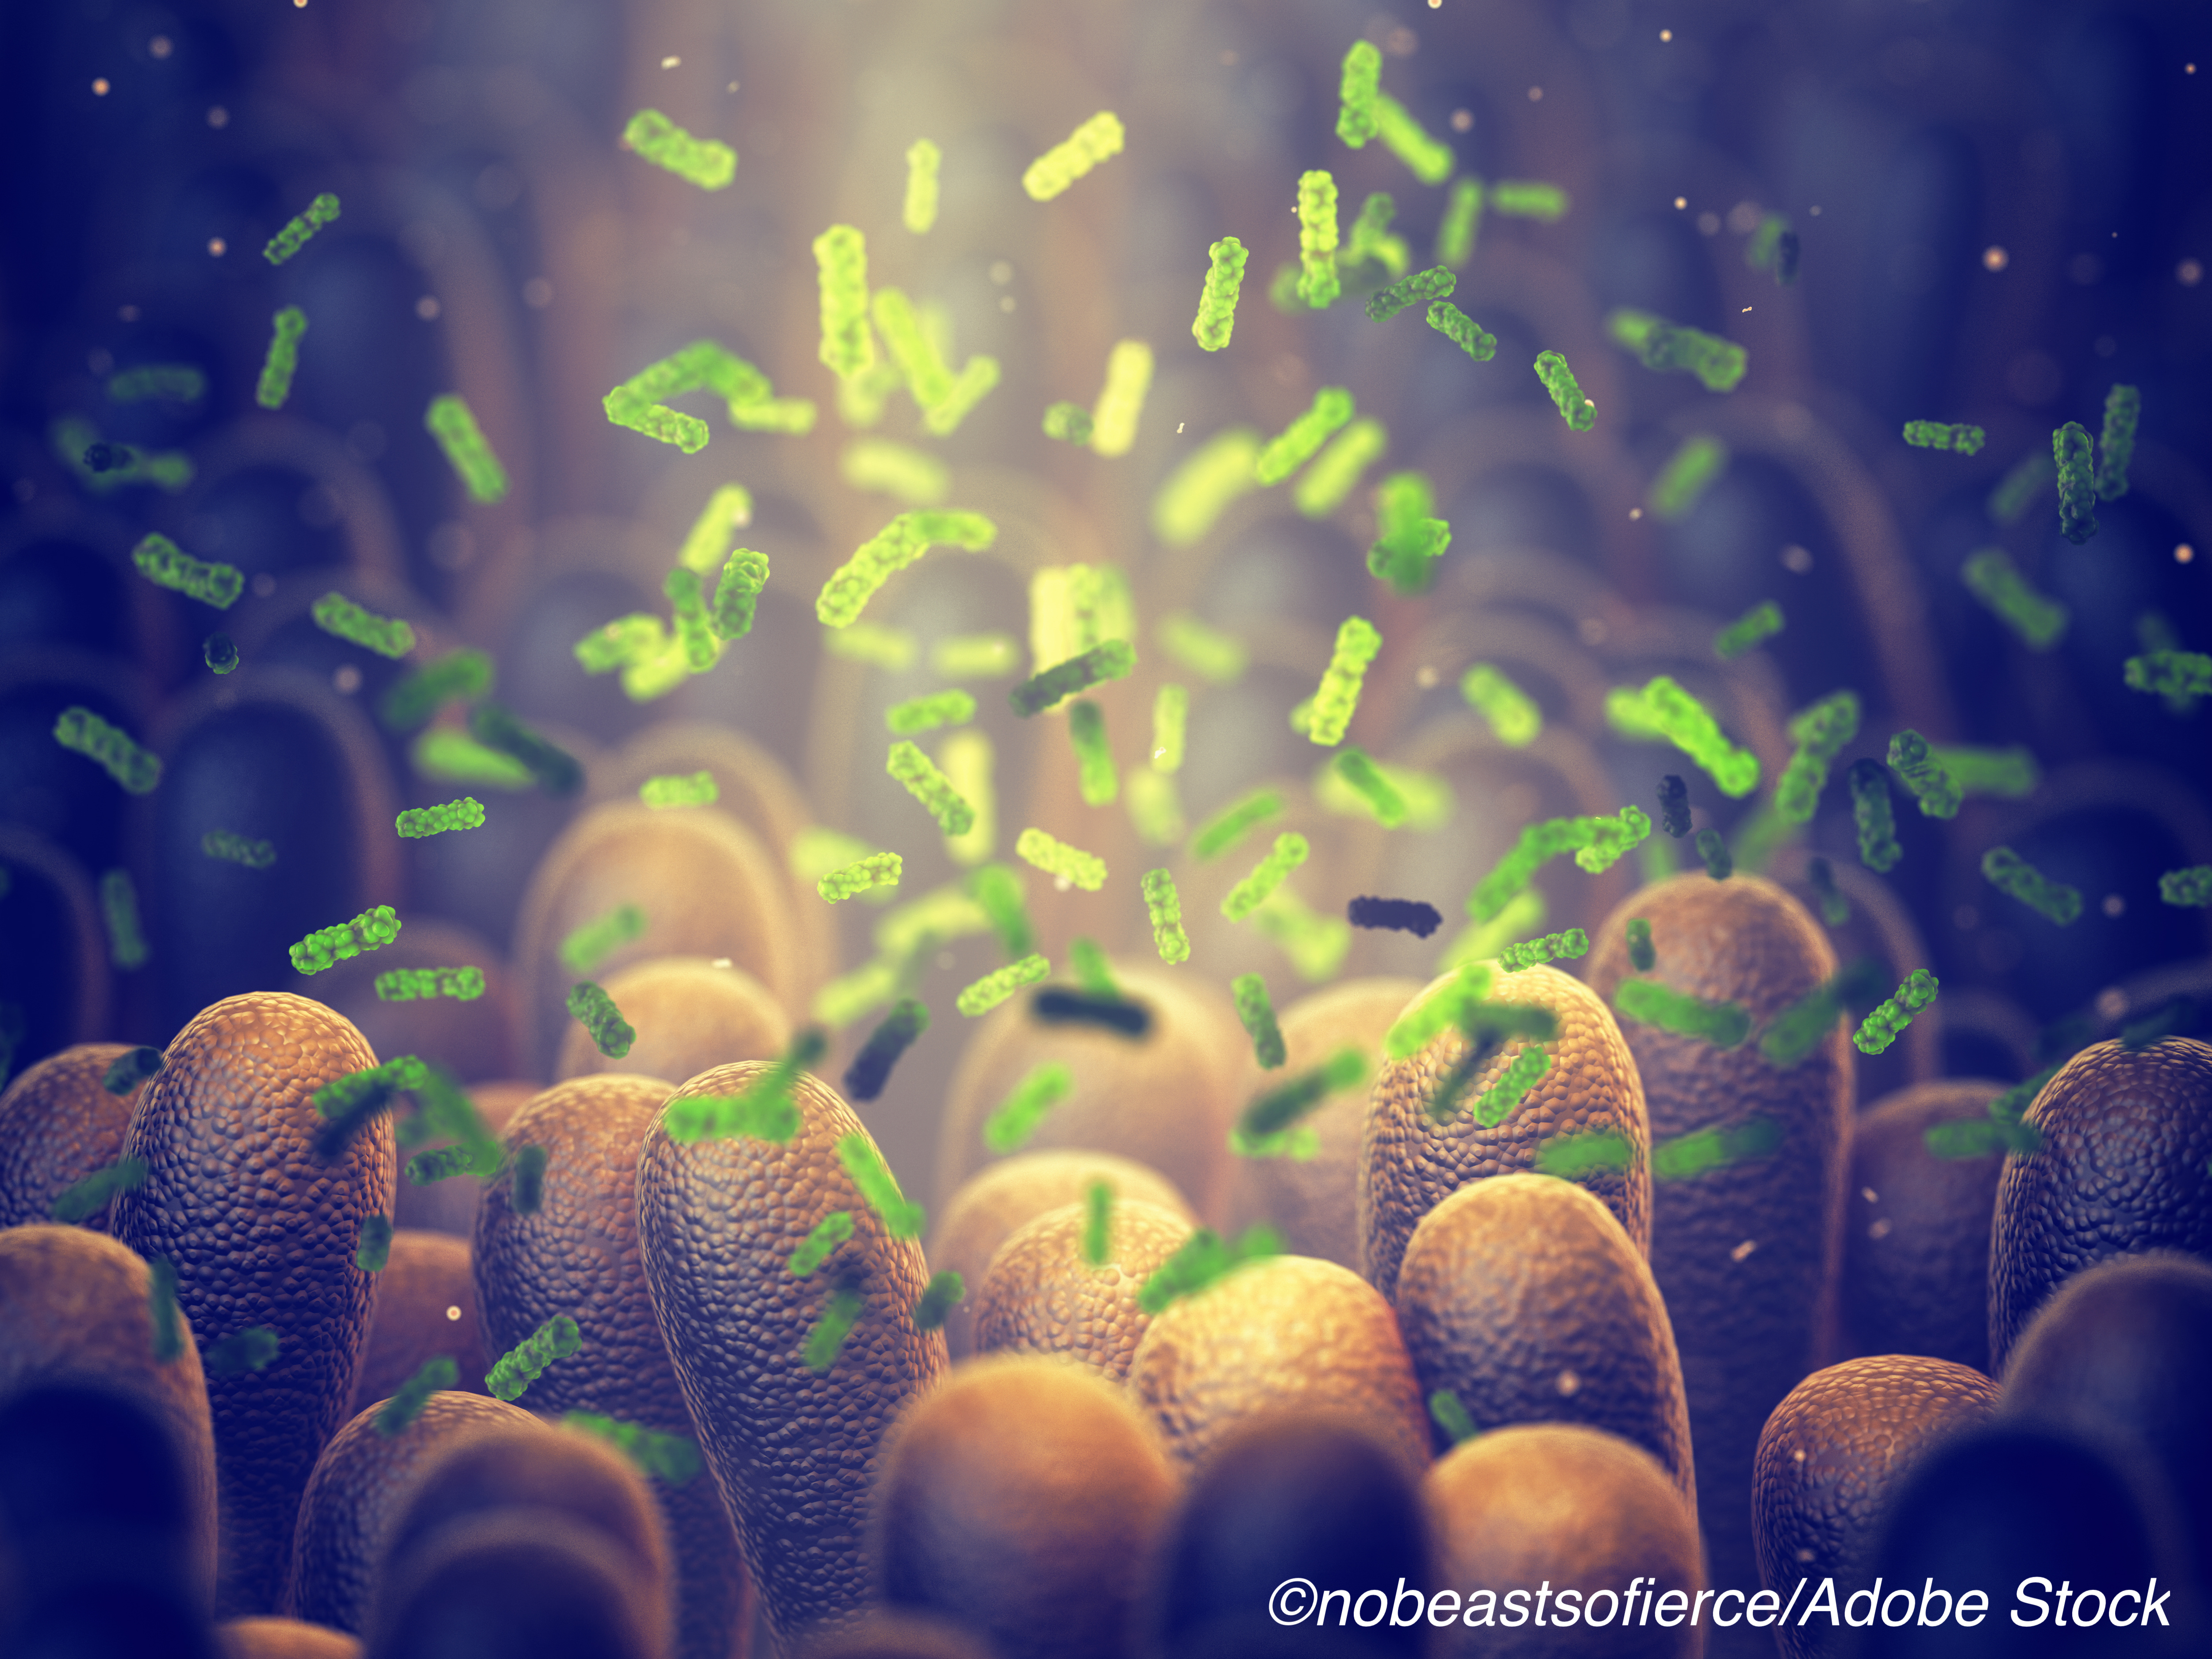 Microbiota Associated with Kids’ Stunted Growth